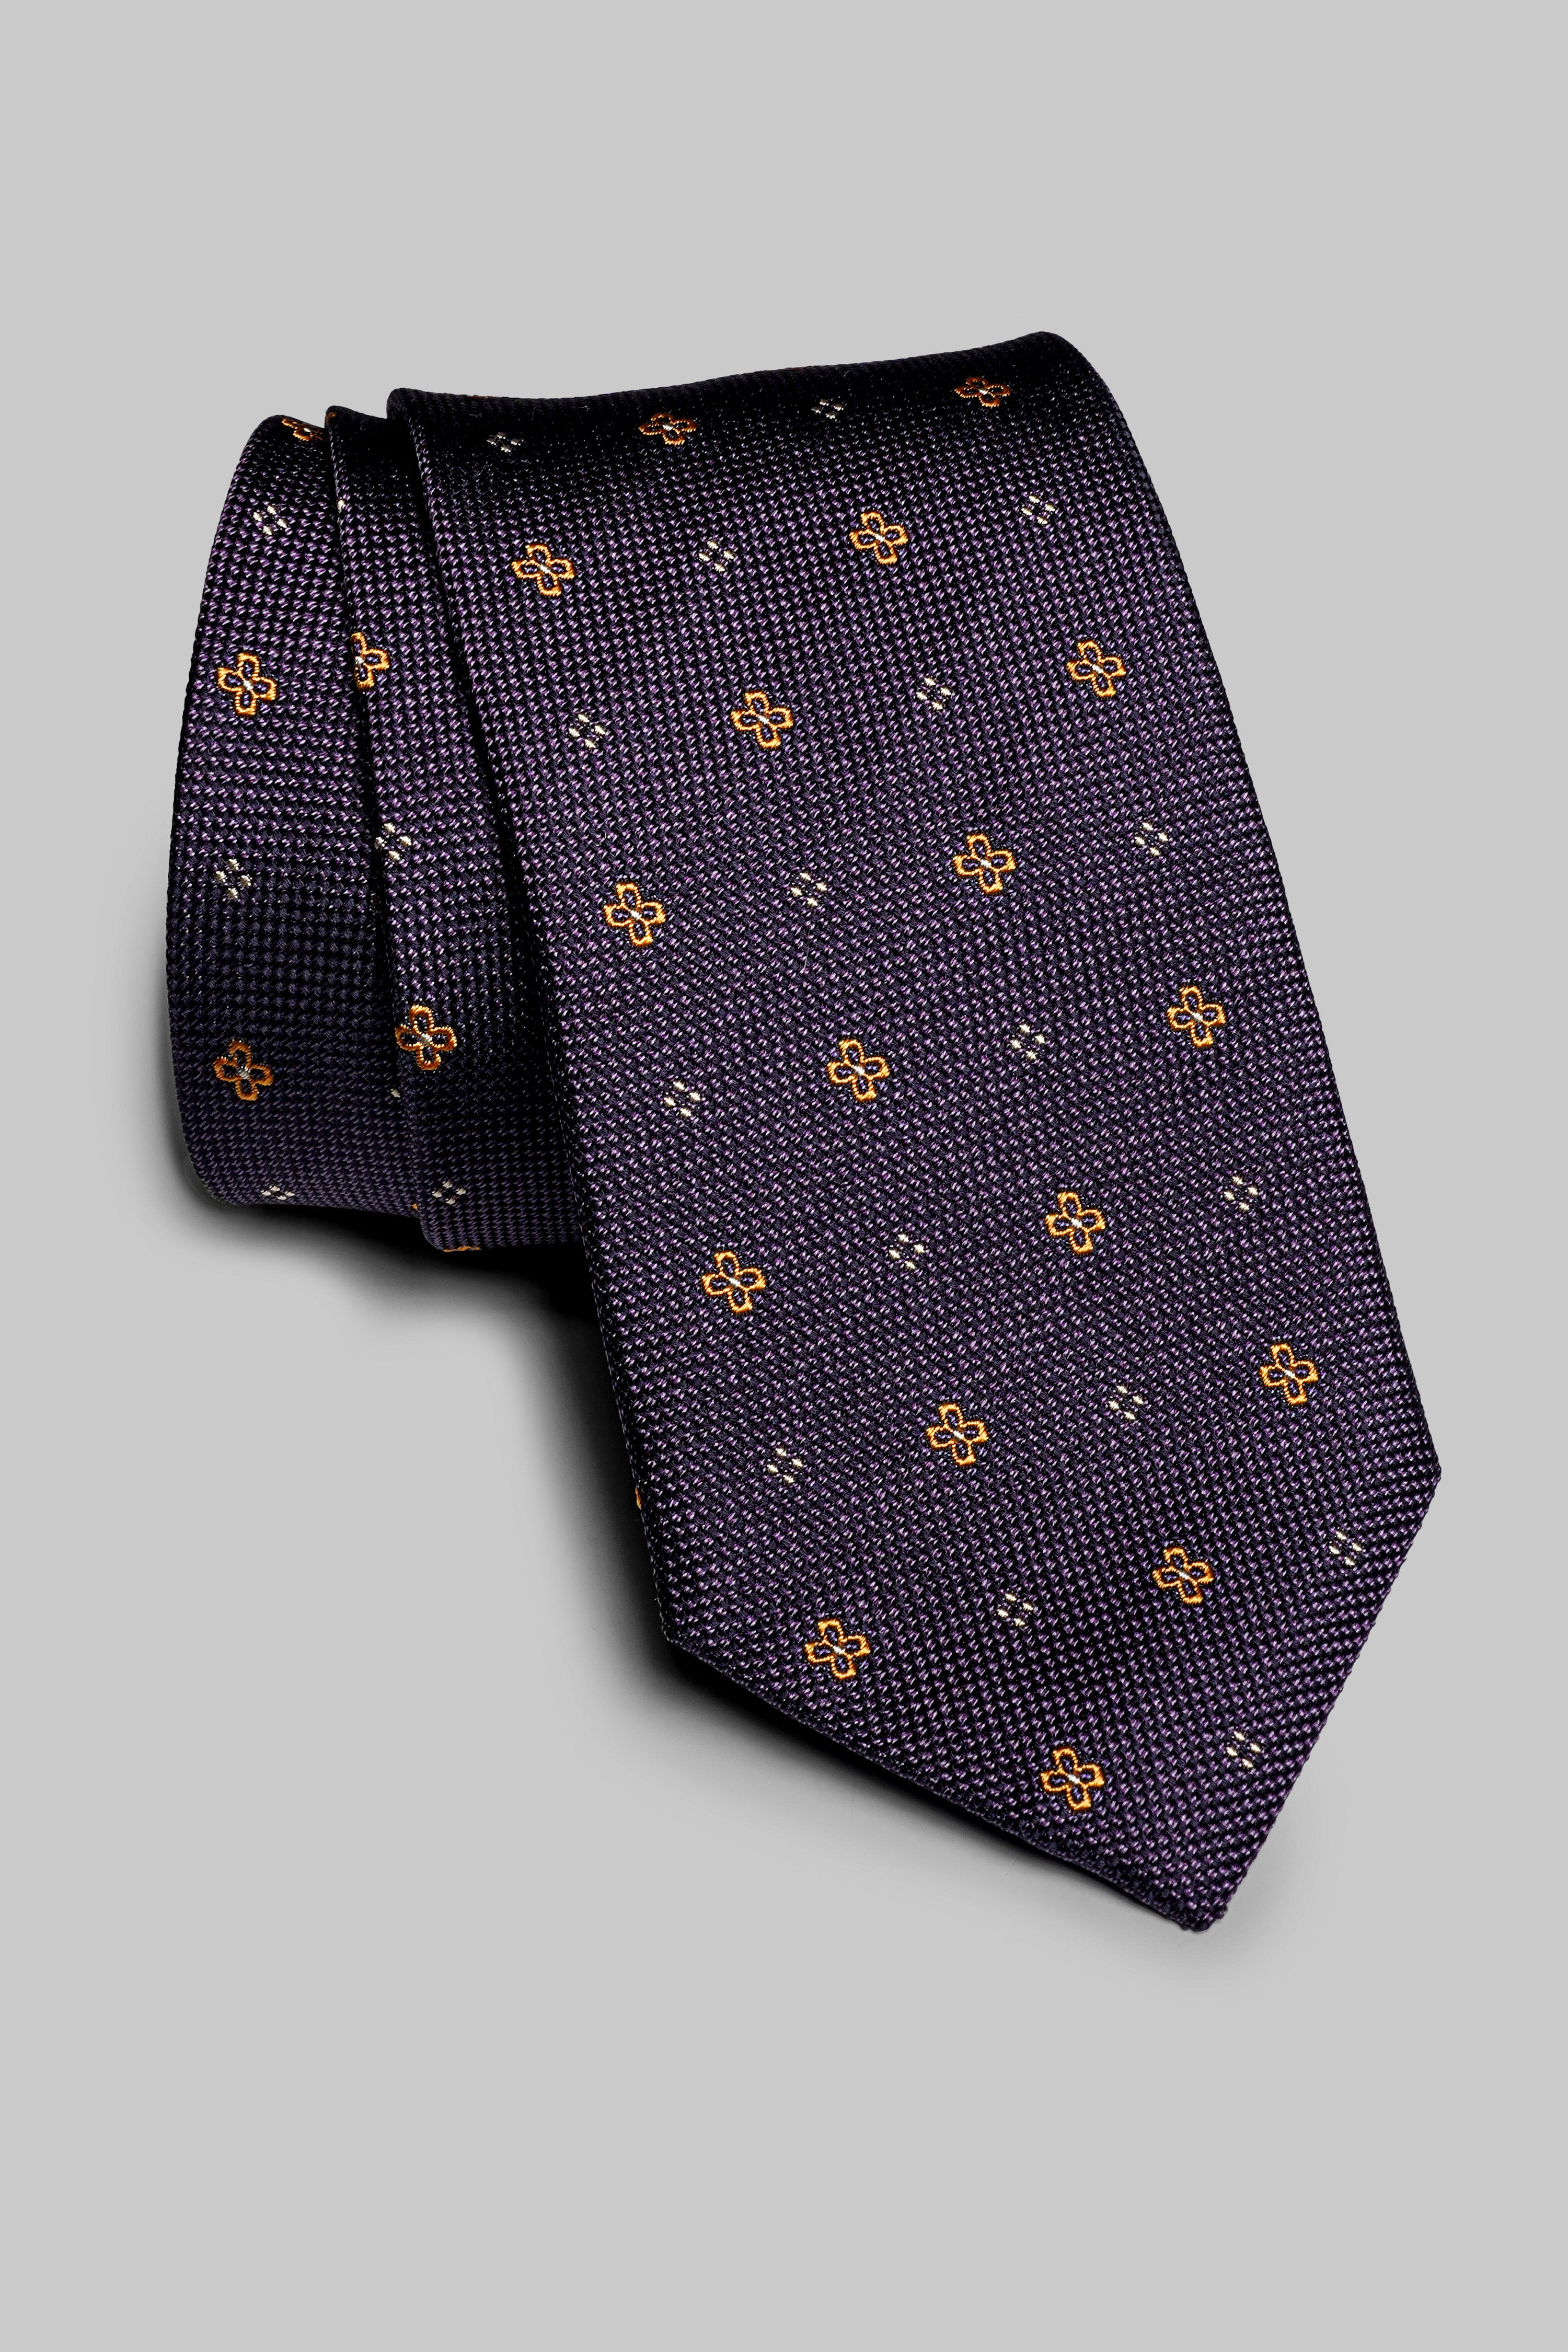 Vue alternative St. George cravate en soie en violet